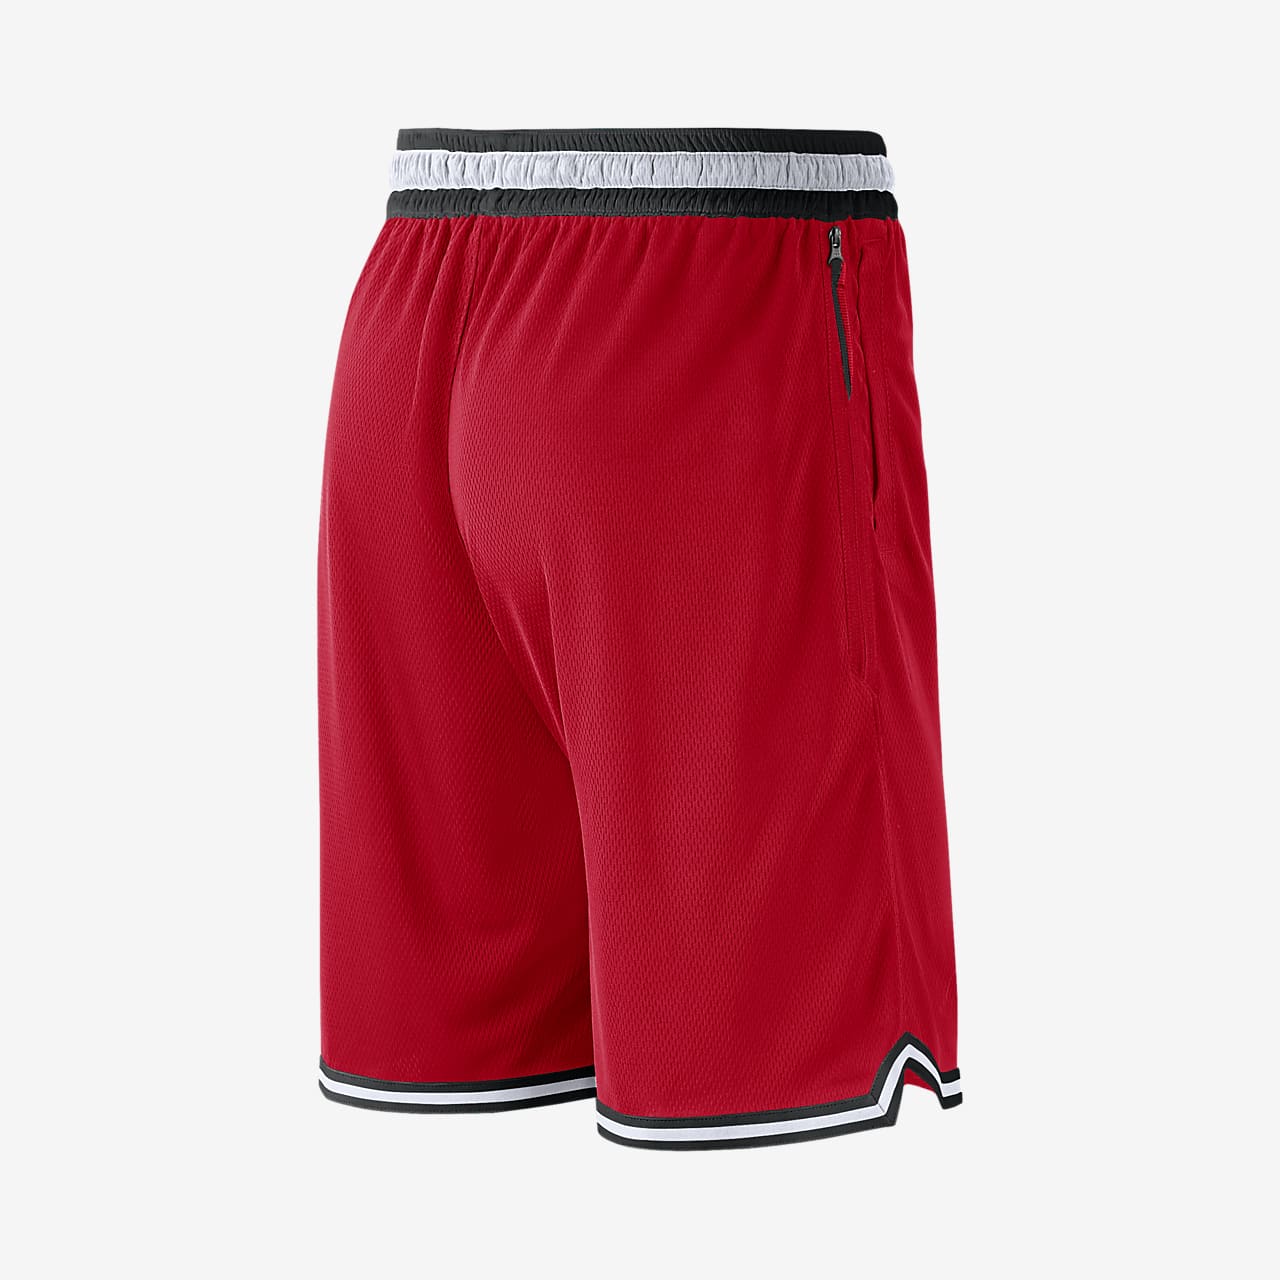 Chicago Bulls DNA Men's Nike NBA Shorts 